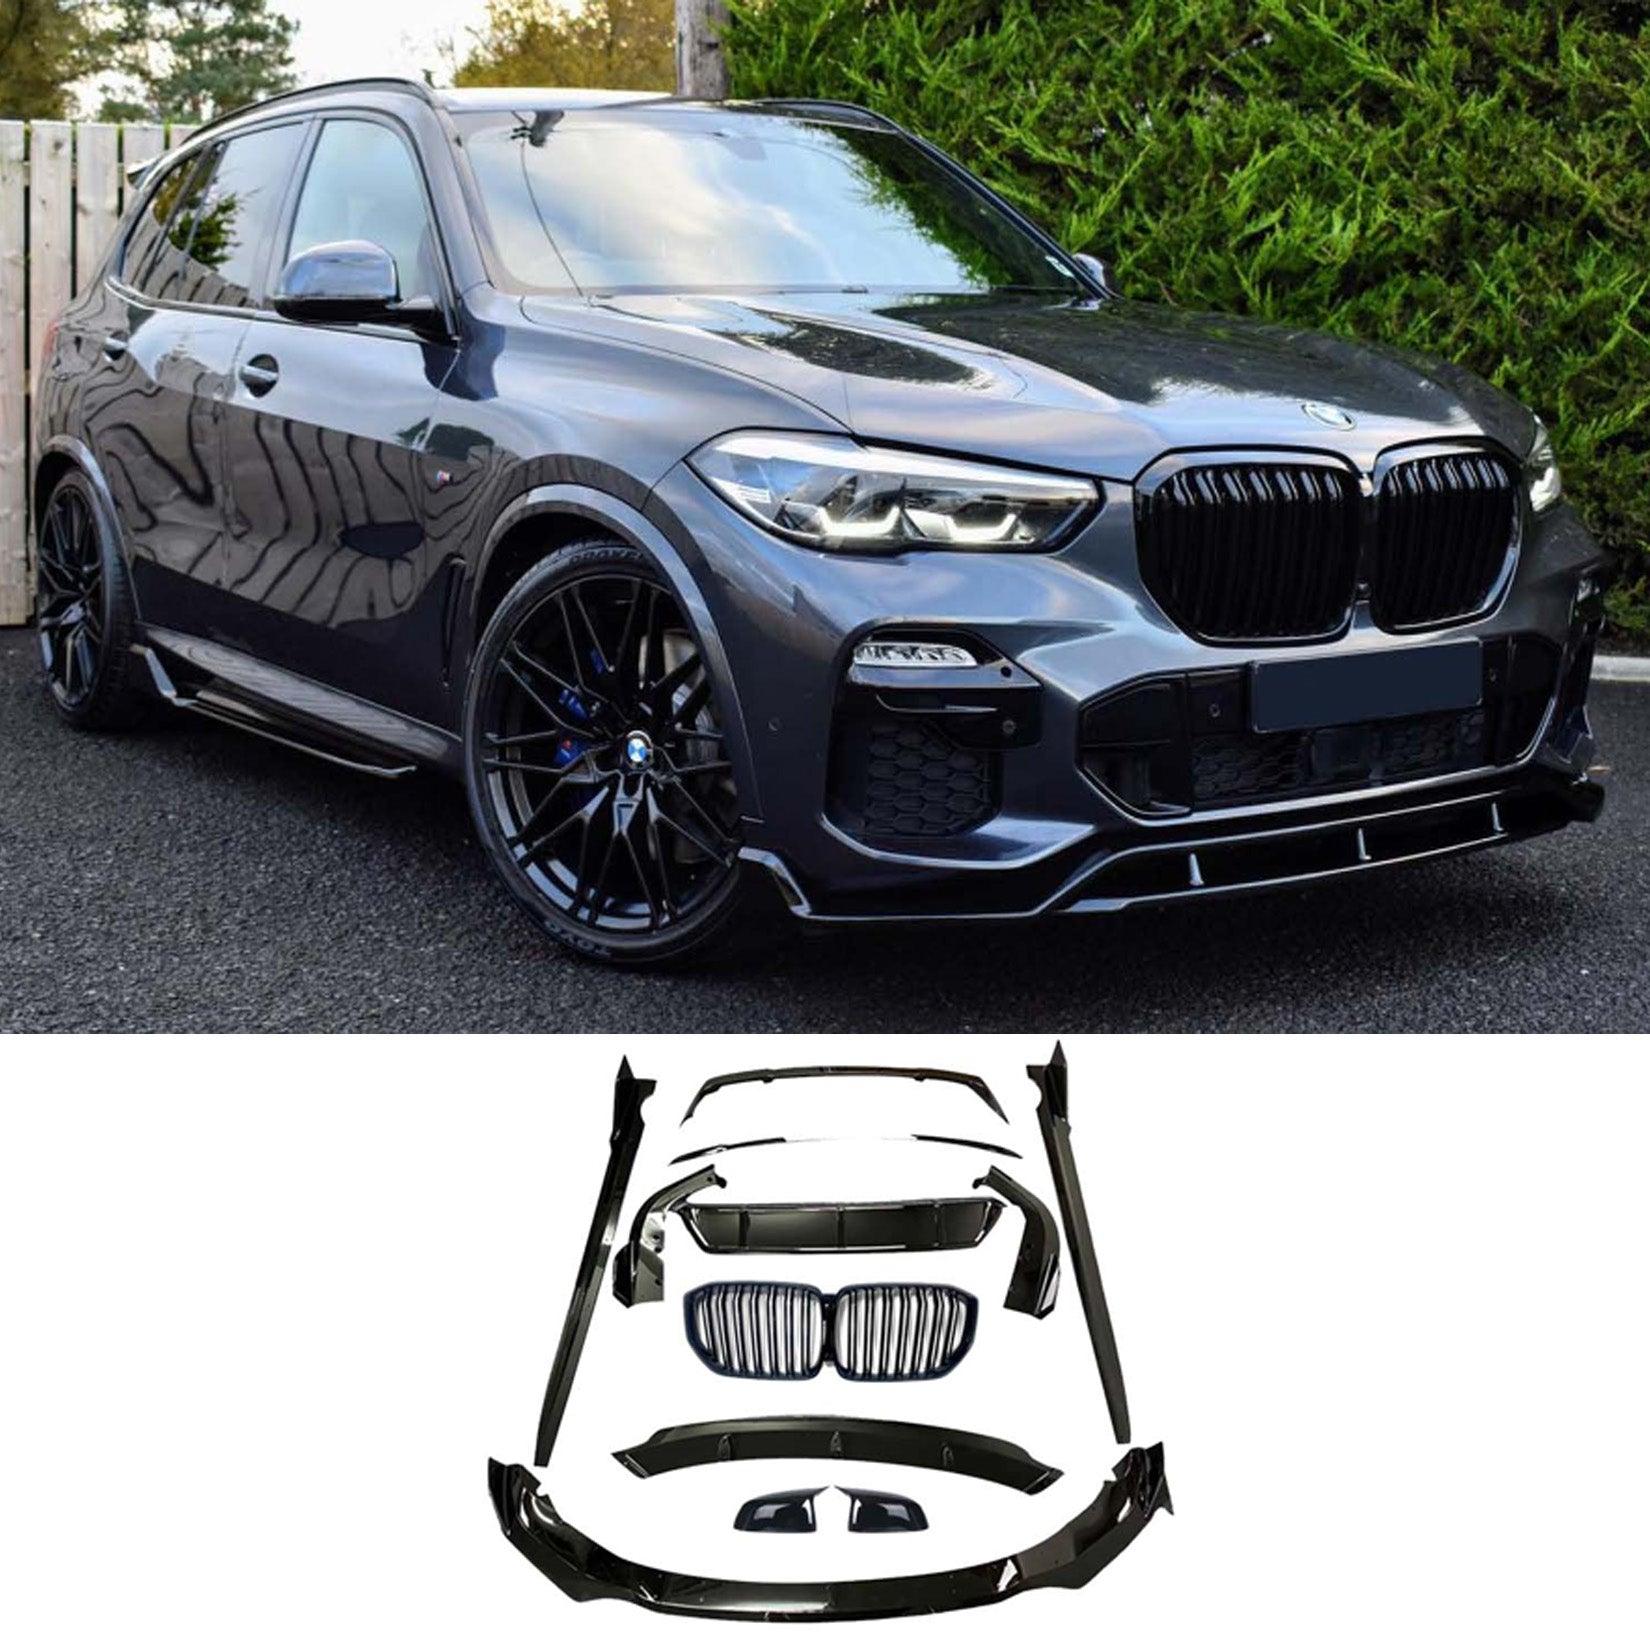 BMW X5 2018 On G05 Gloss Black Aero Bodykit – RisperStyling